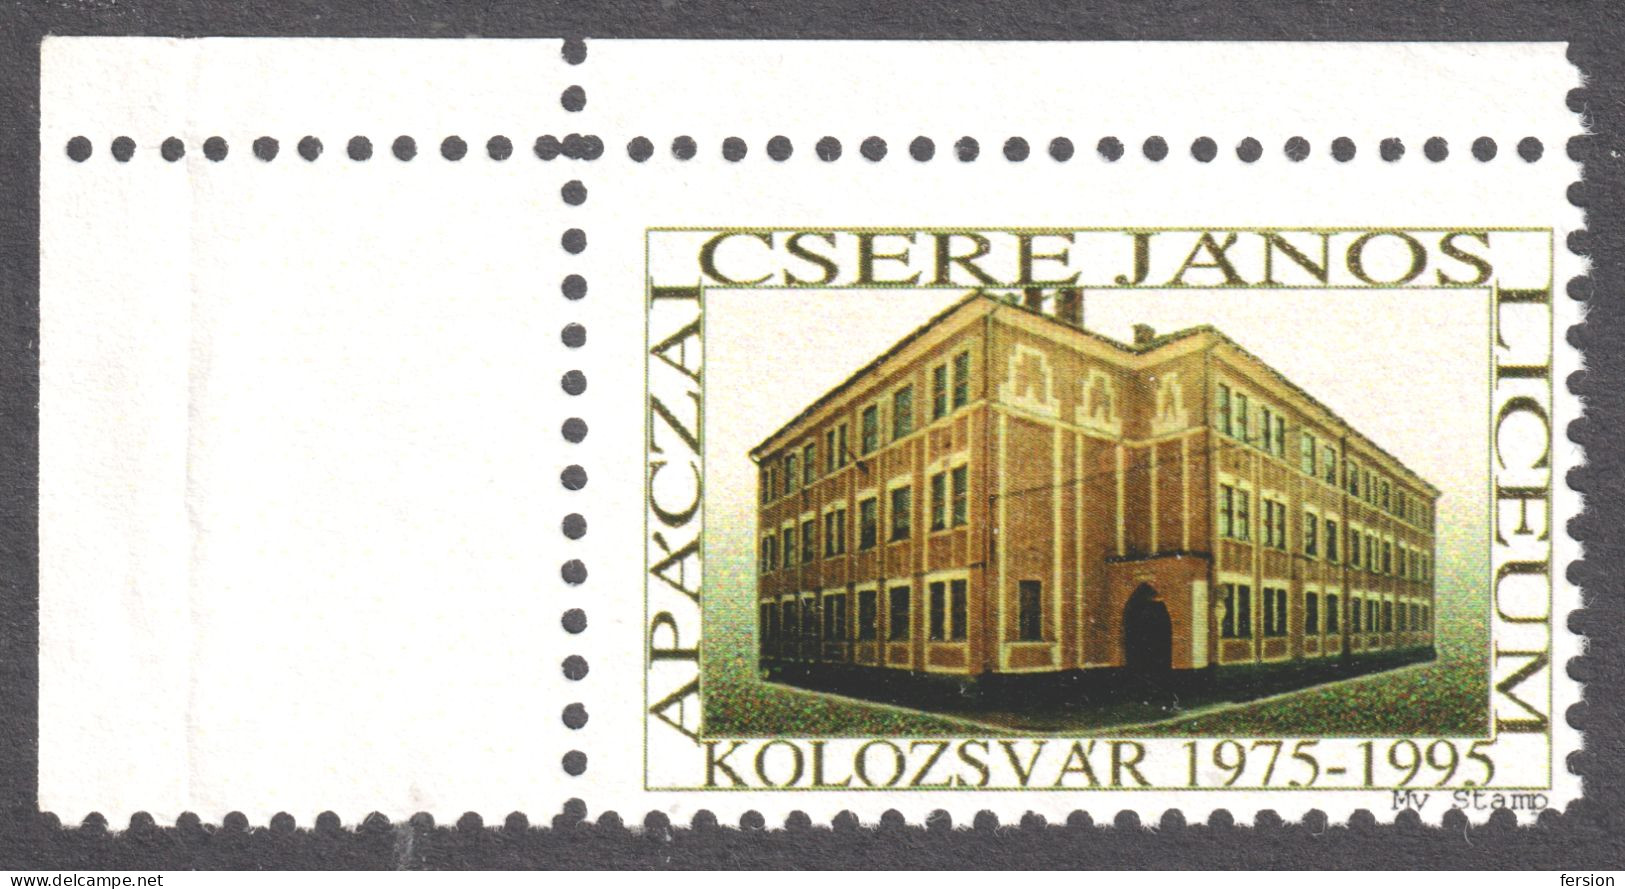 Transylvania Erdély Liceul Apaczai Csere Janos CLUJ Kolozsvár LICEUM LABEL CINDERELLA VIGNETTE 1995 Hungary My Stamp - Transylvanie